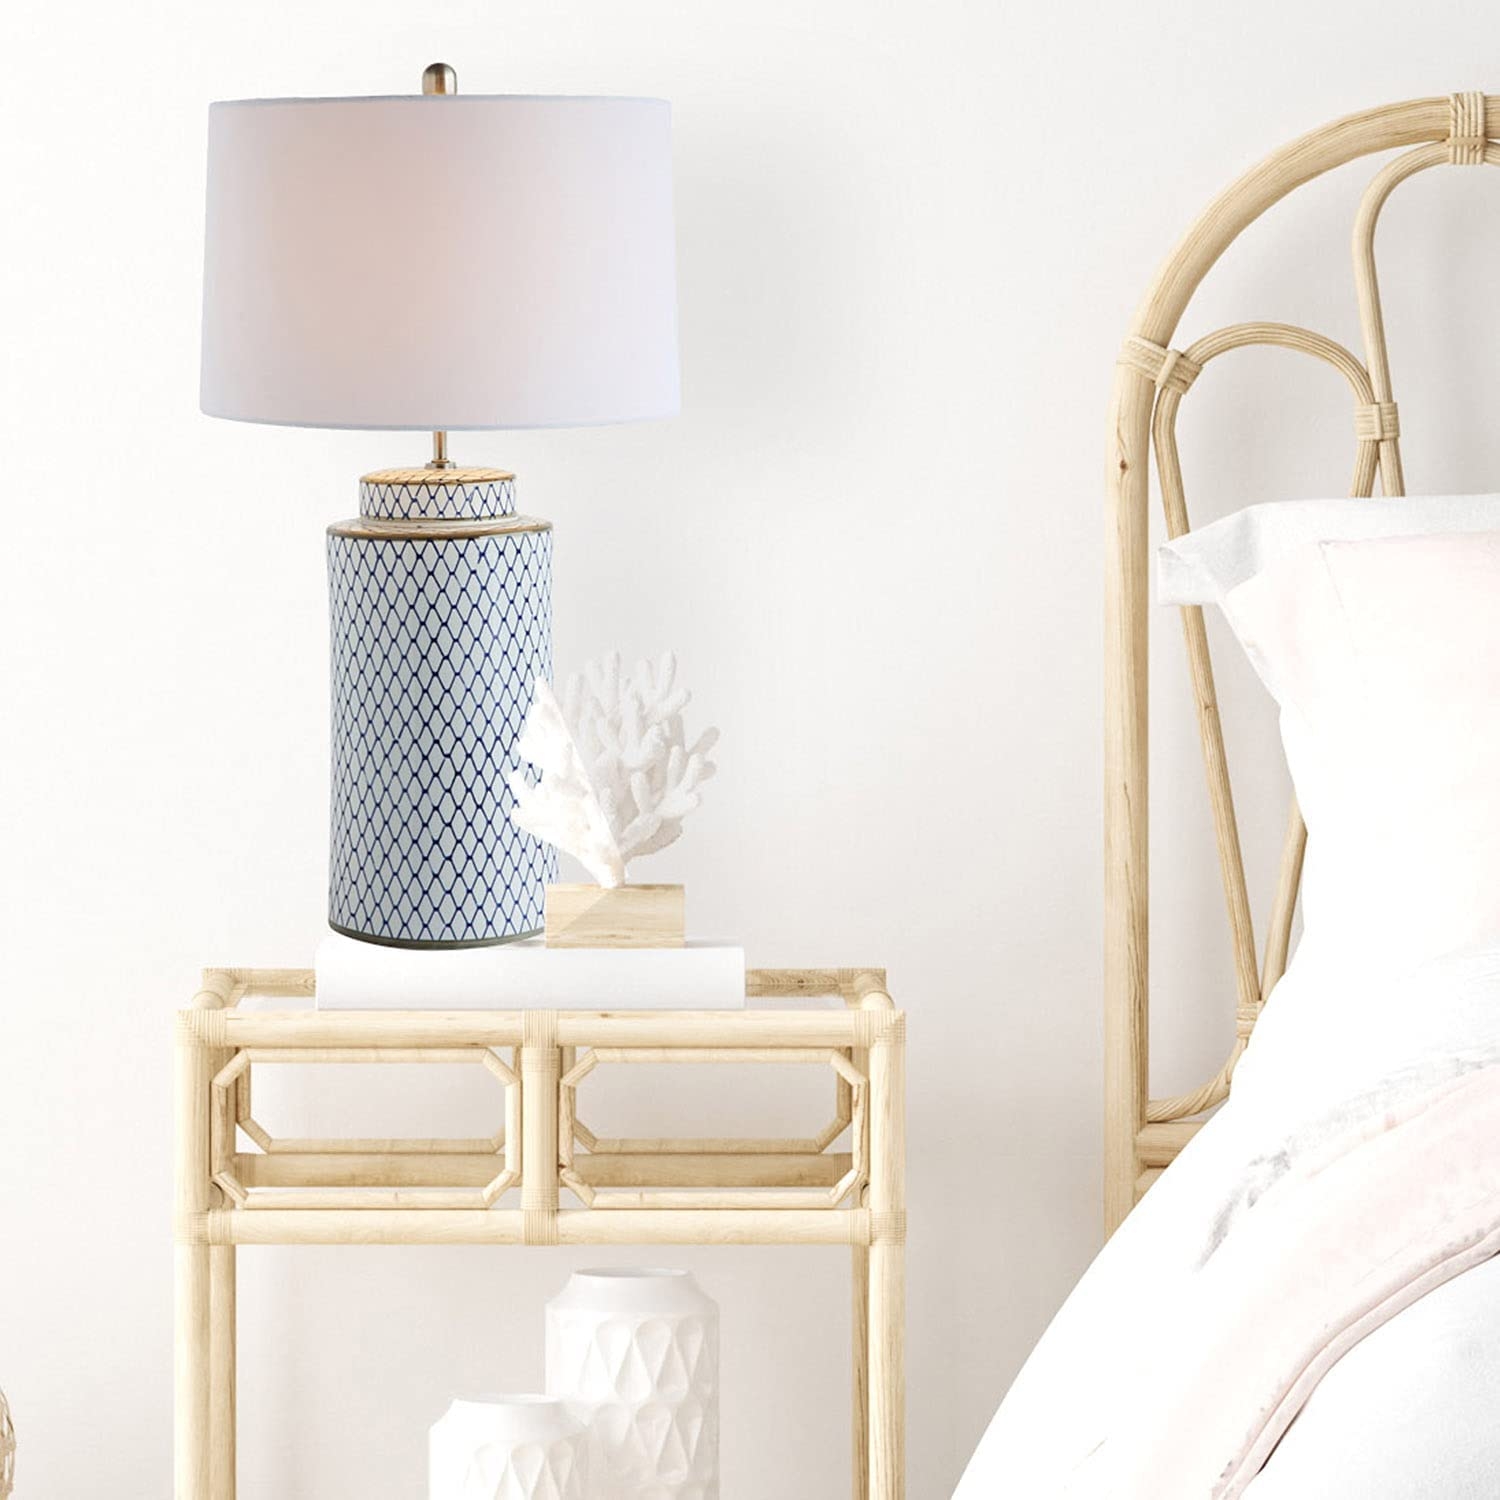 Ceramic Table lamp with Linen Shade, Indigo & White - Image 3